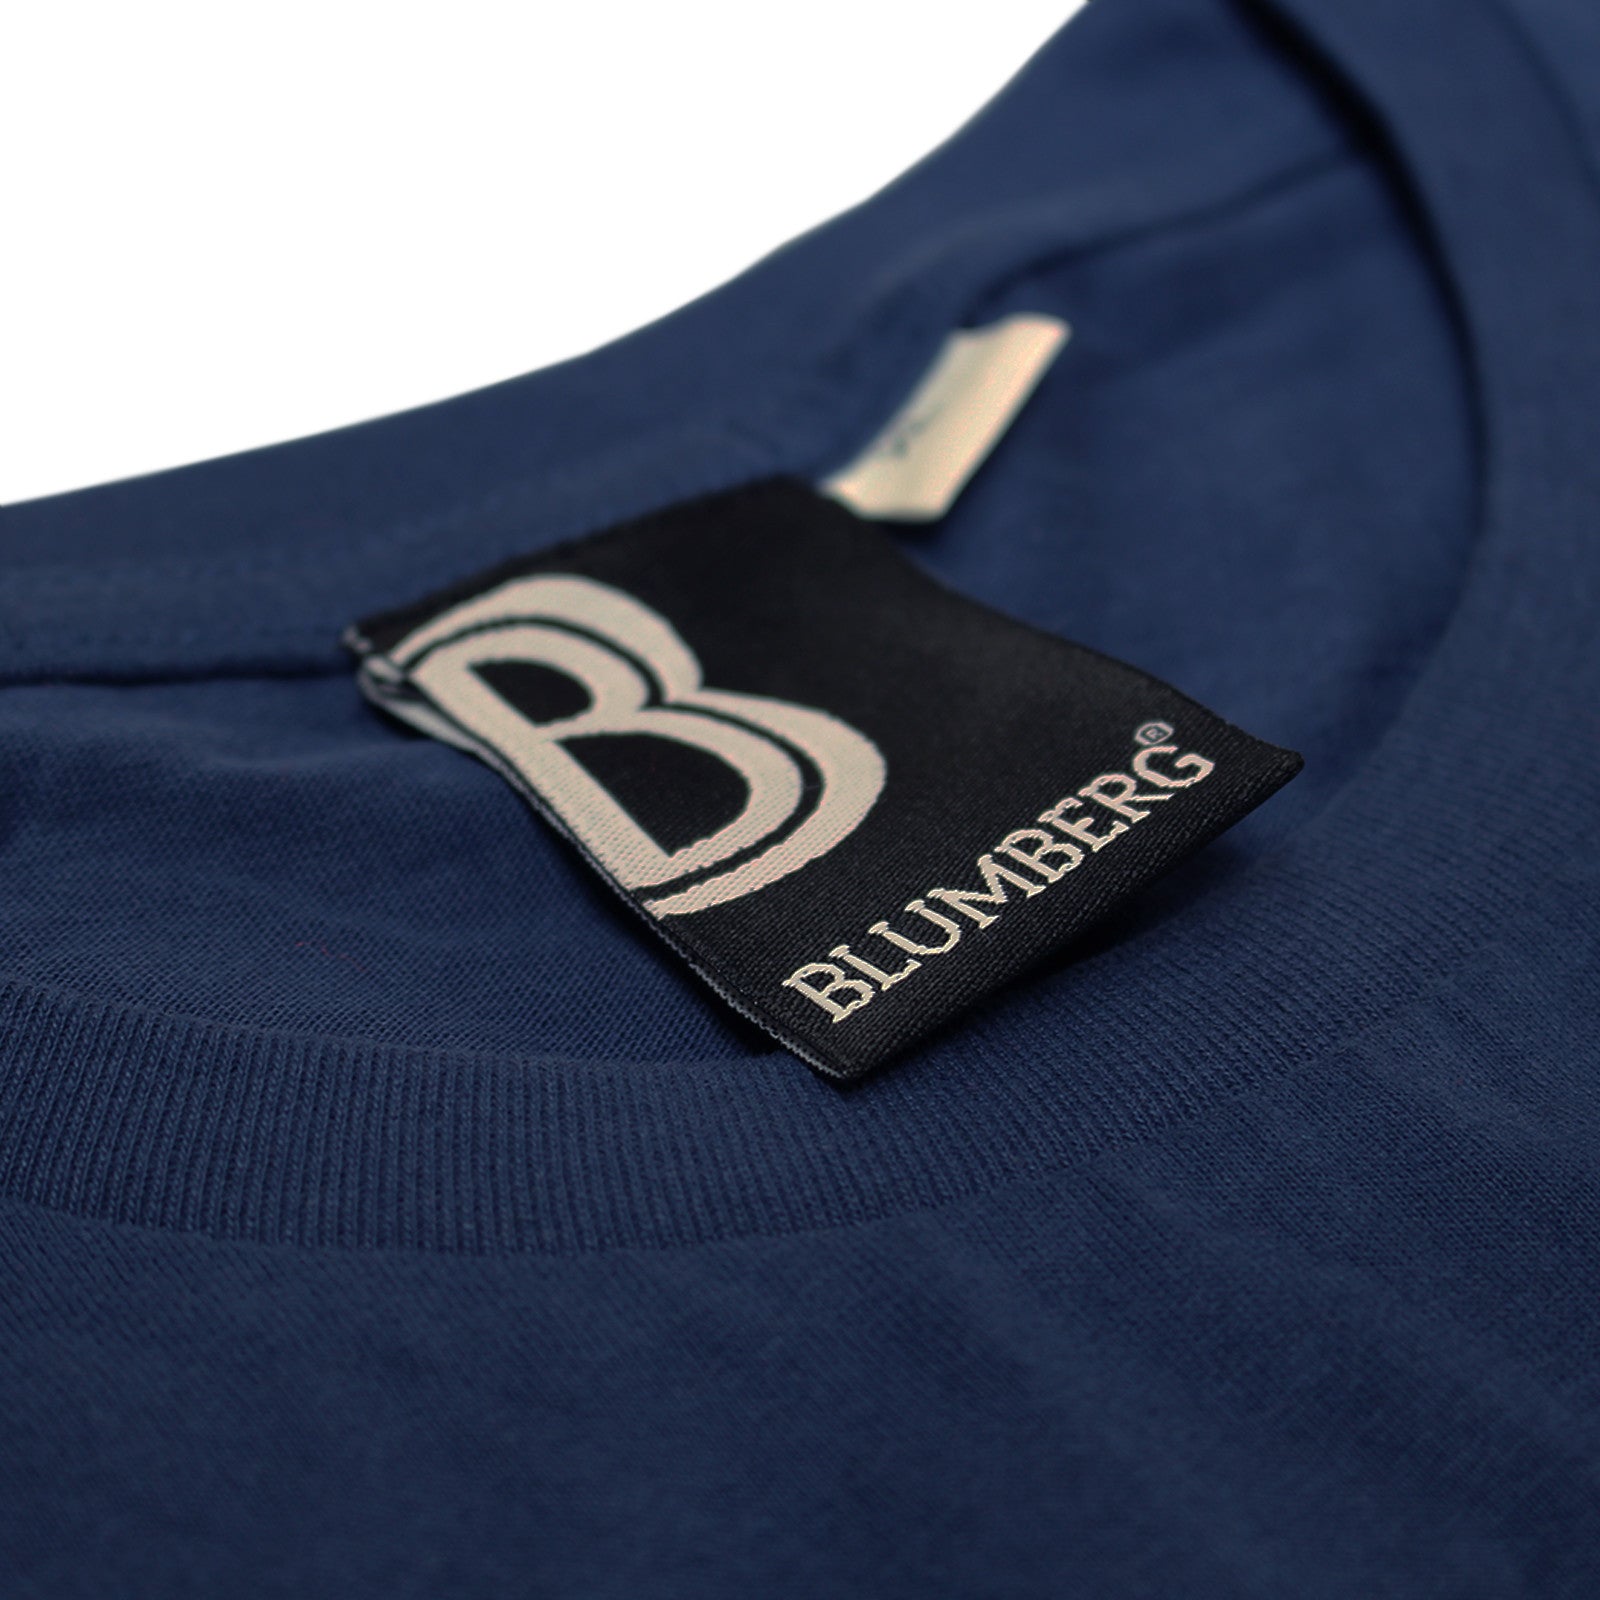 Blumberg Australia Authentic Outback Clothing Premium T-Shirt